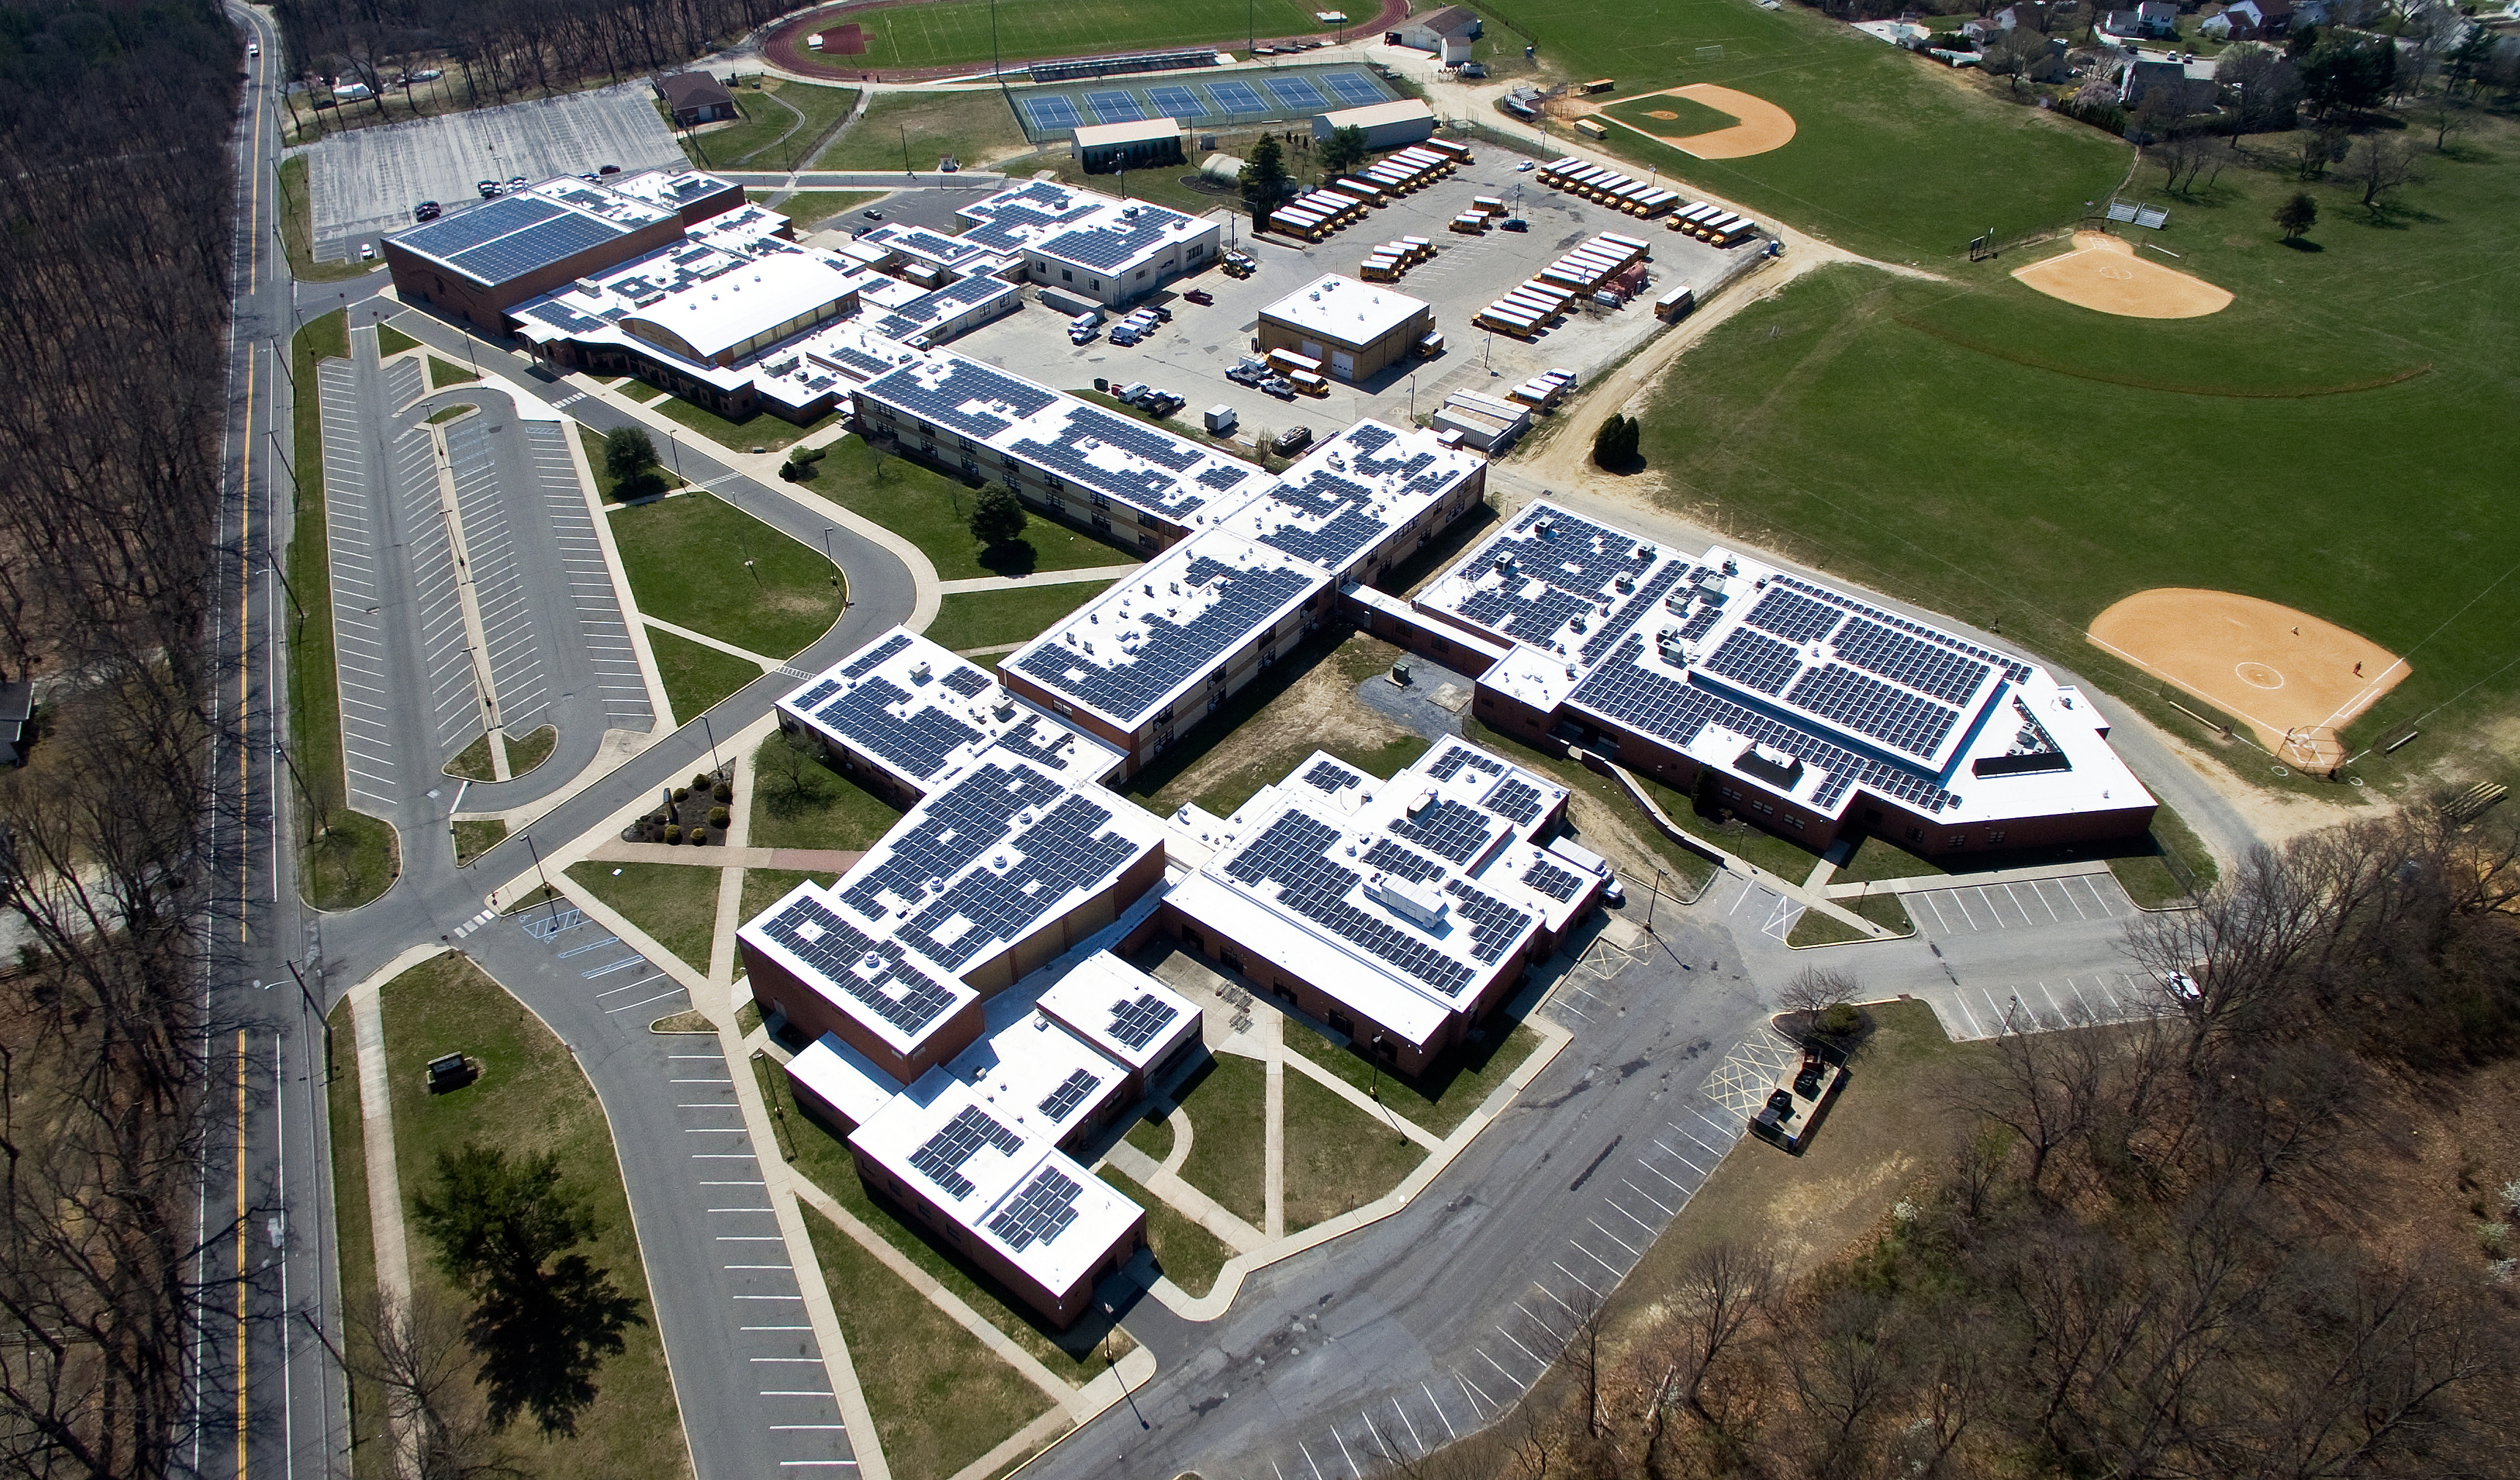 K12 stockphoto solar roof high school